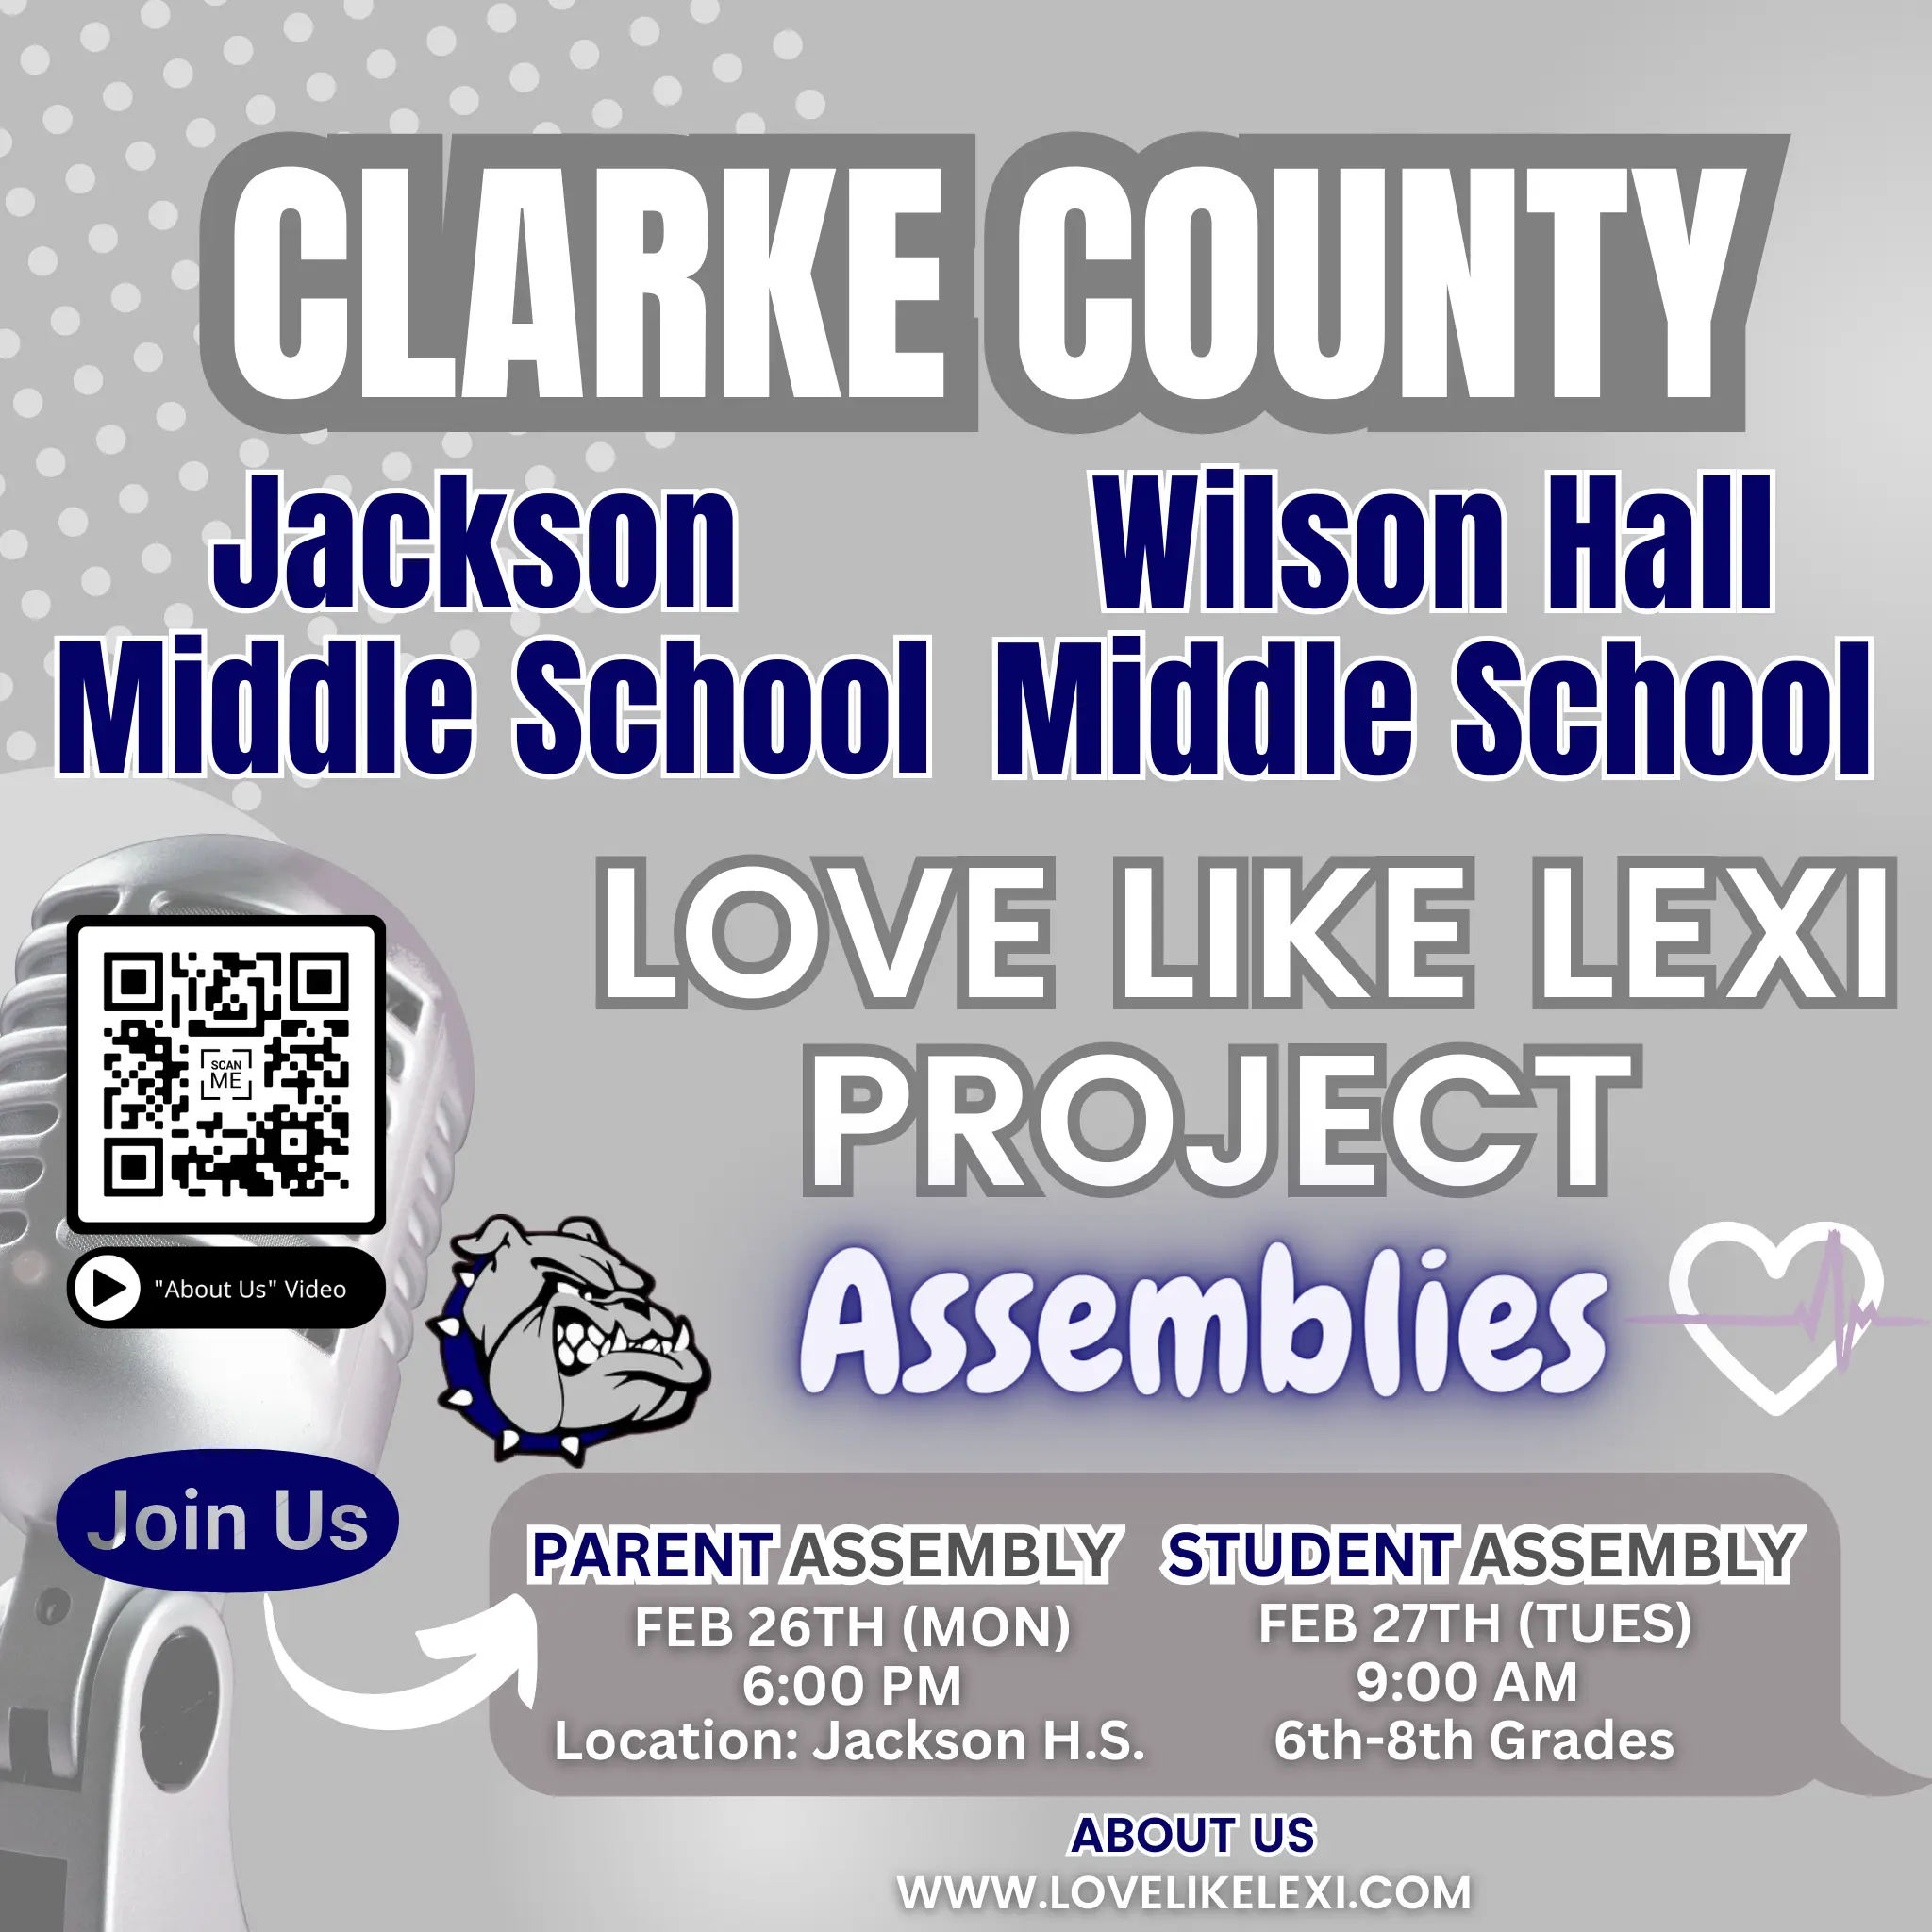 Clarke County Jackson, Wilson Hall Middle School